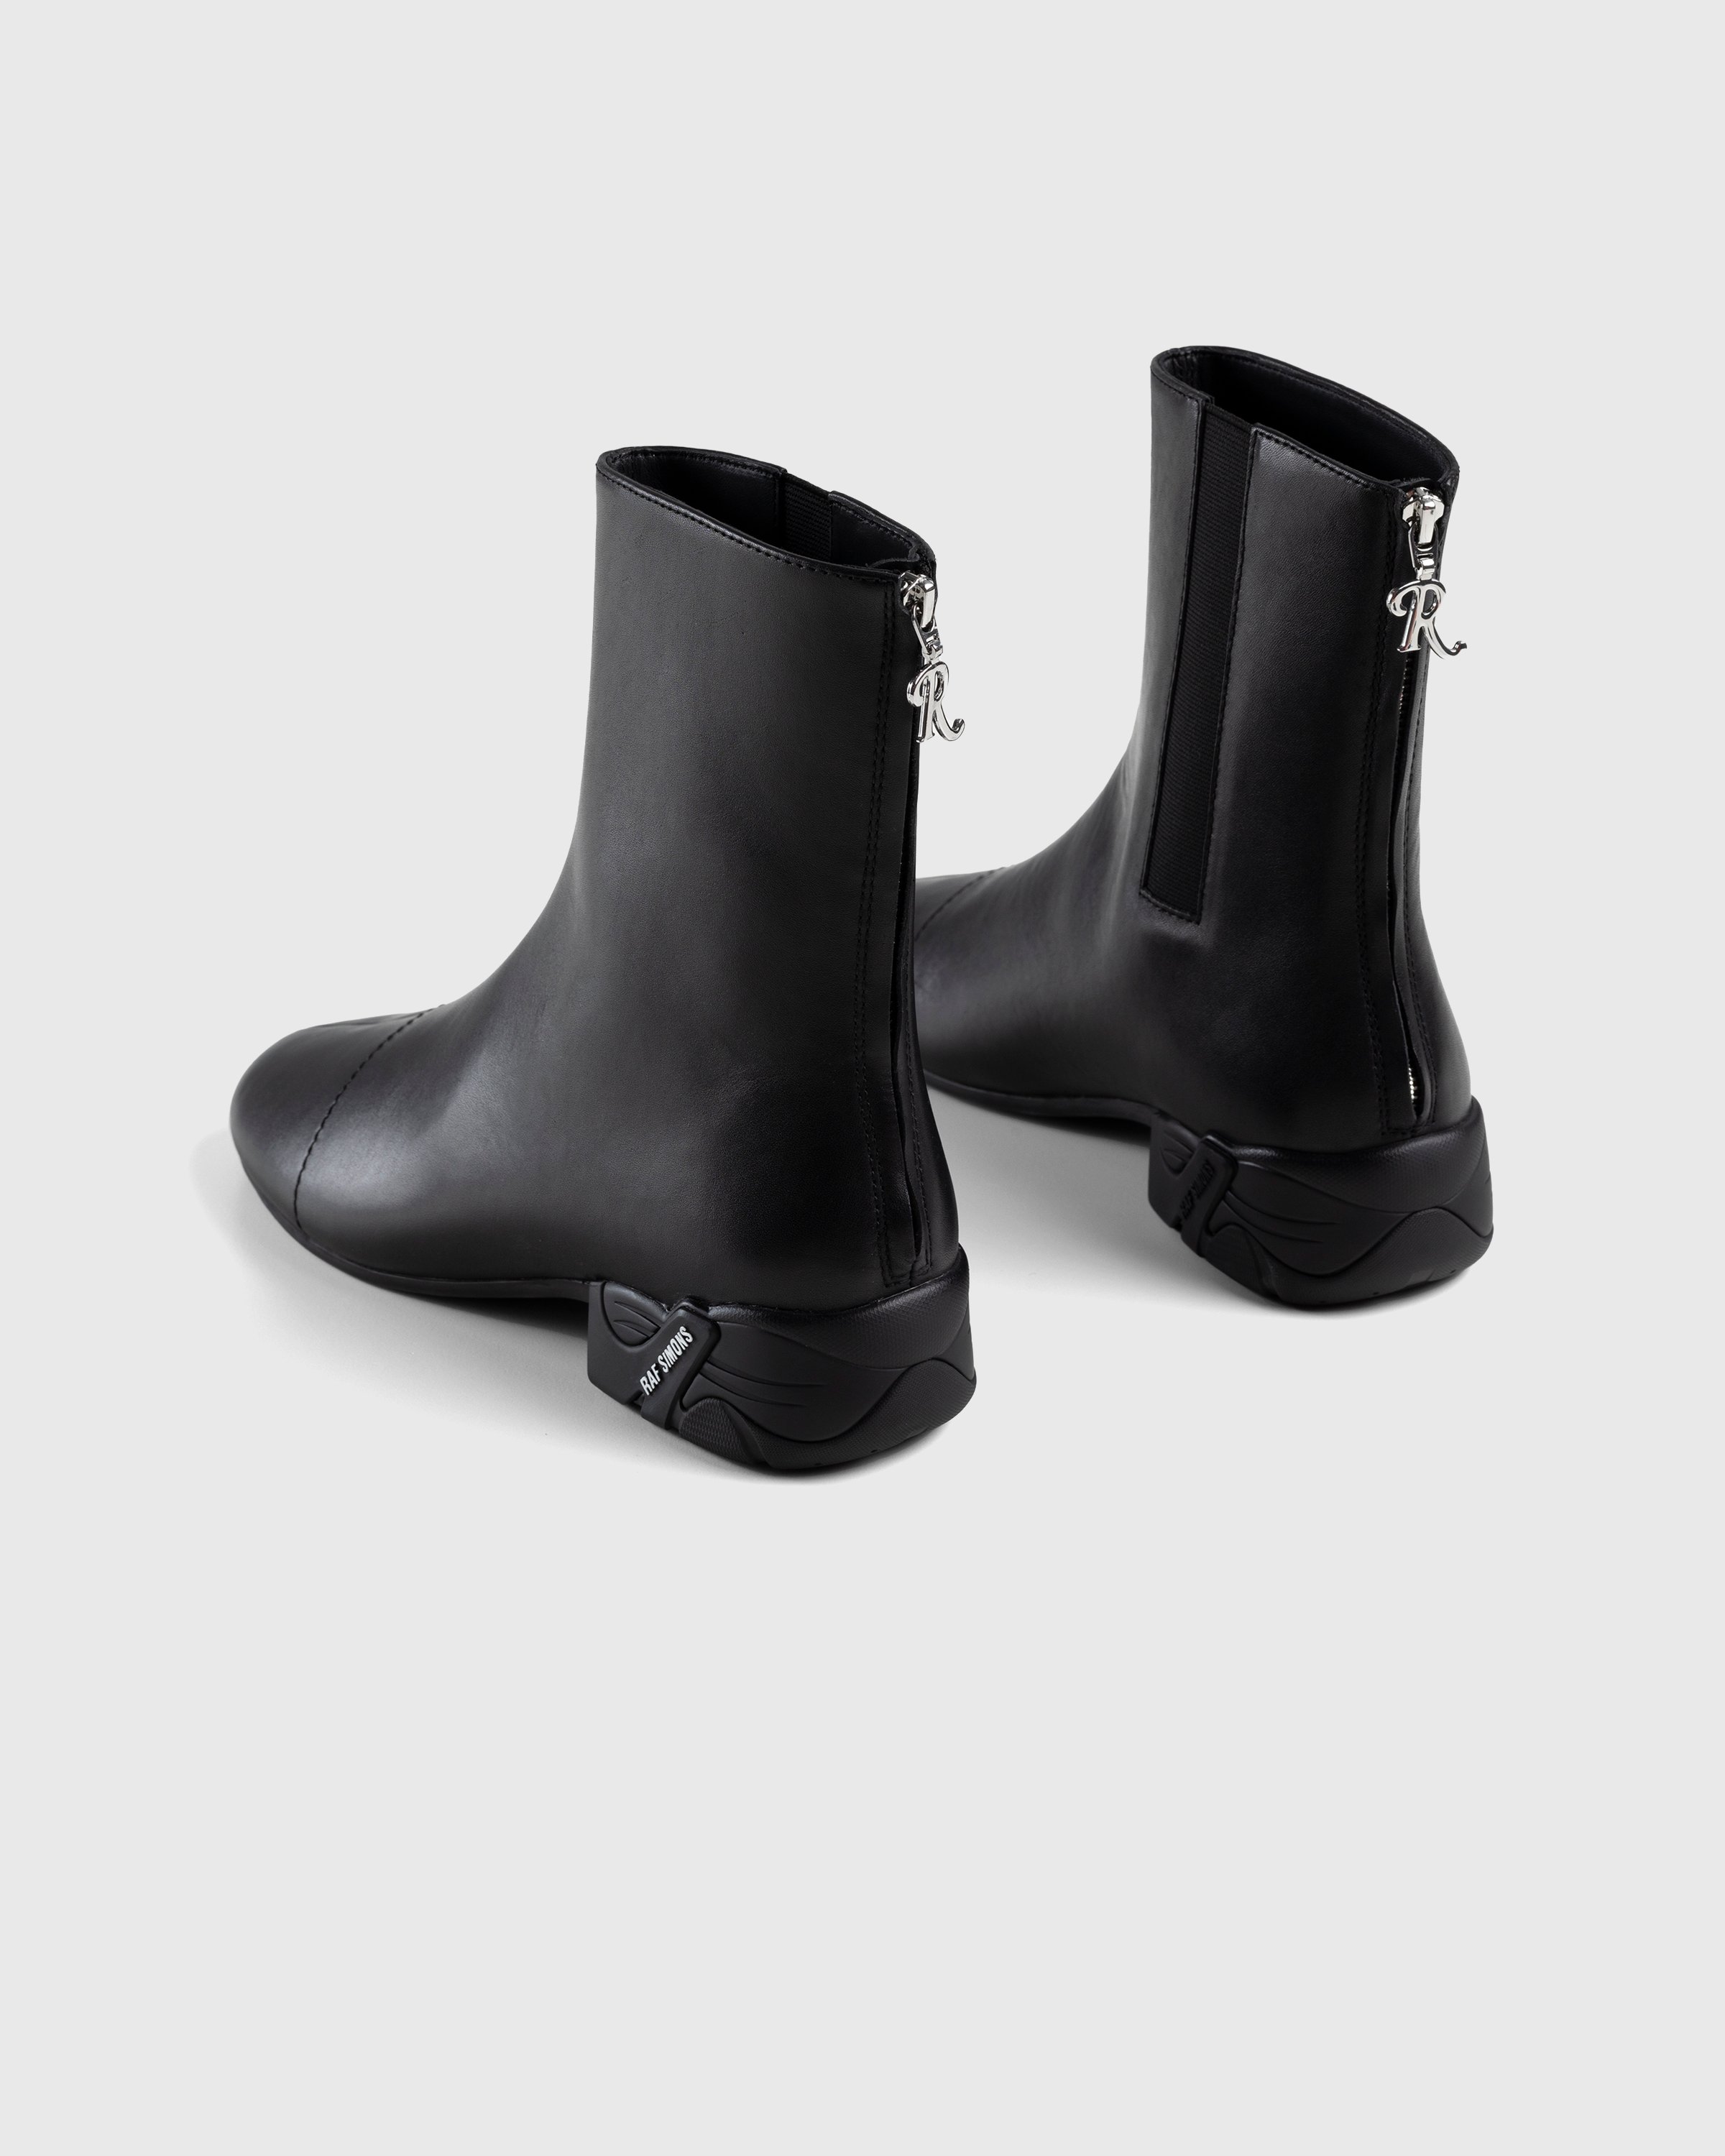 Raf Simons - Solaris High Leather Boot Black - Footwear - Black - Image 4